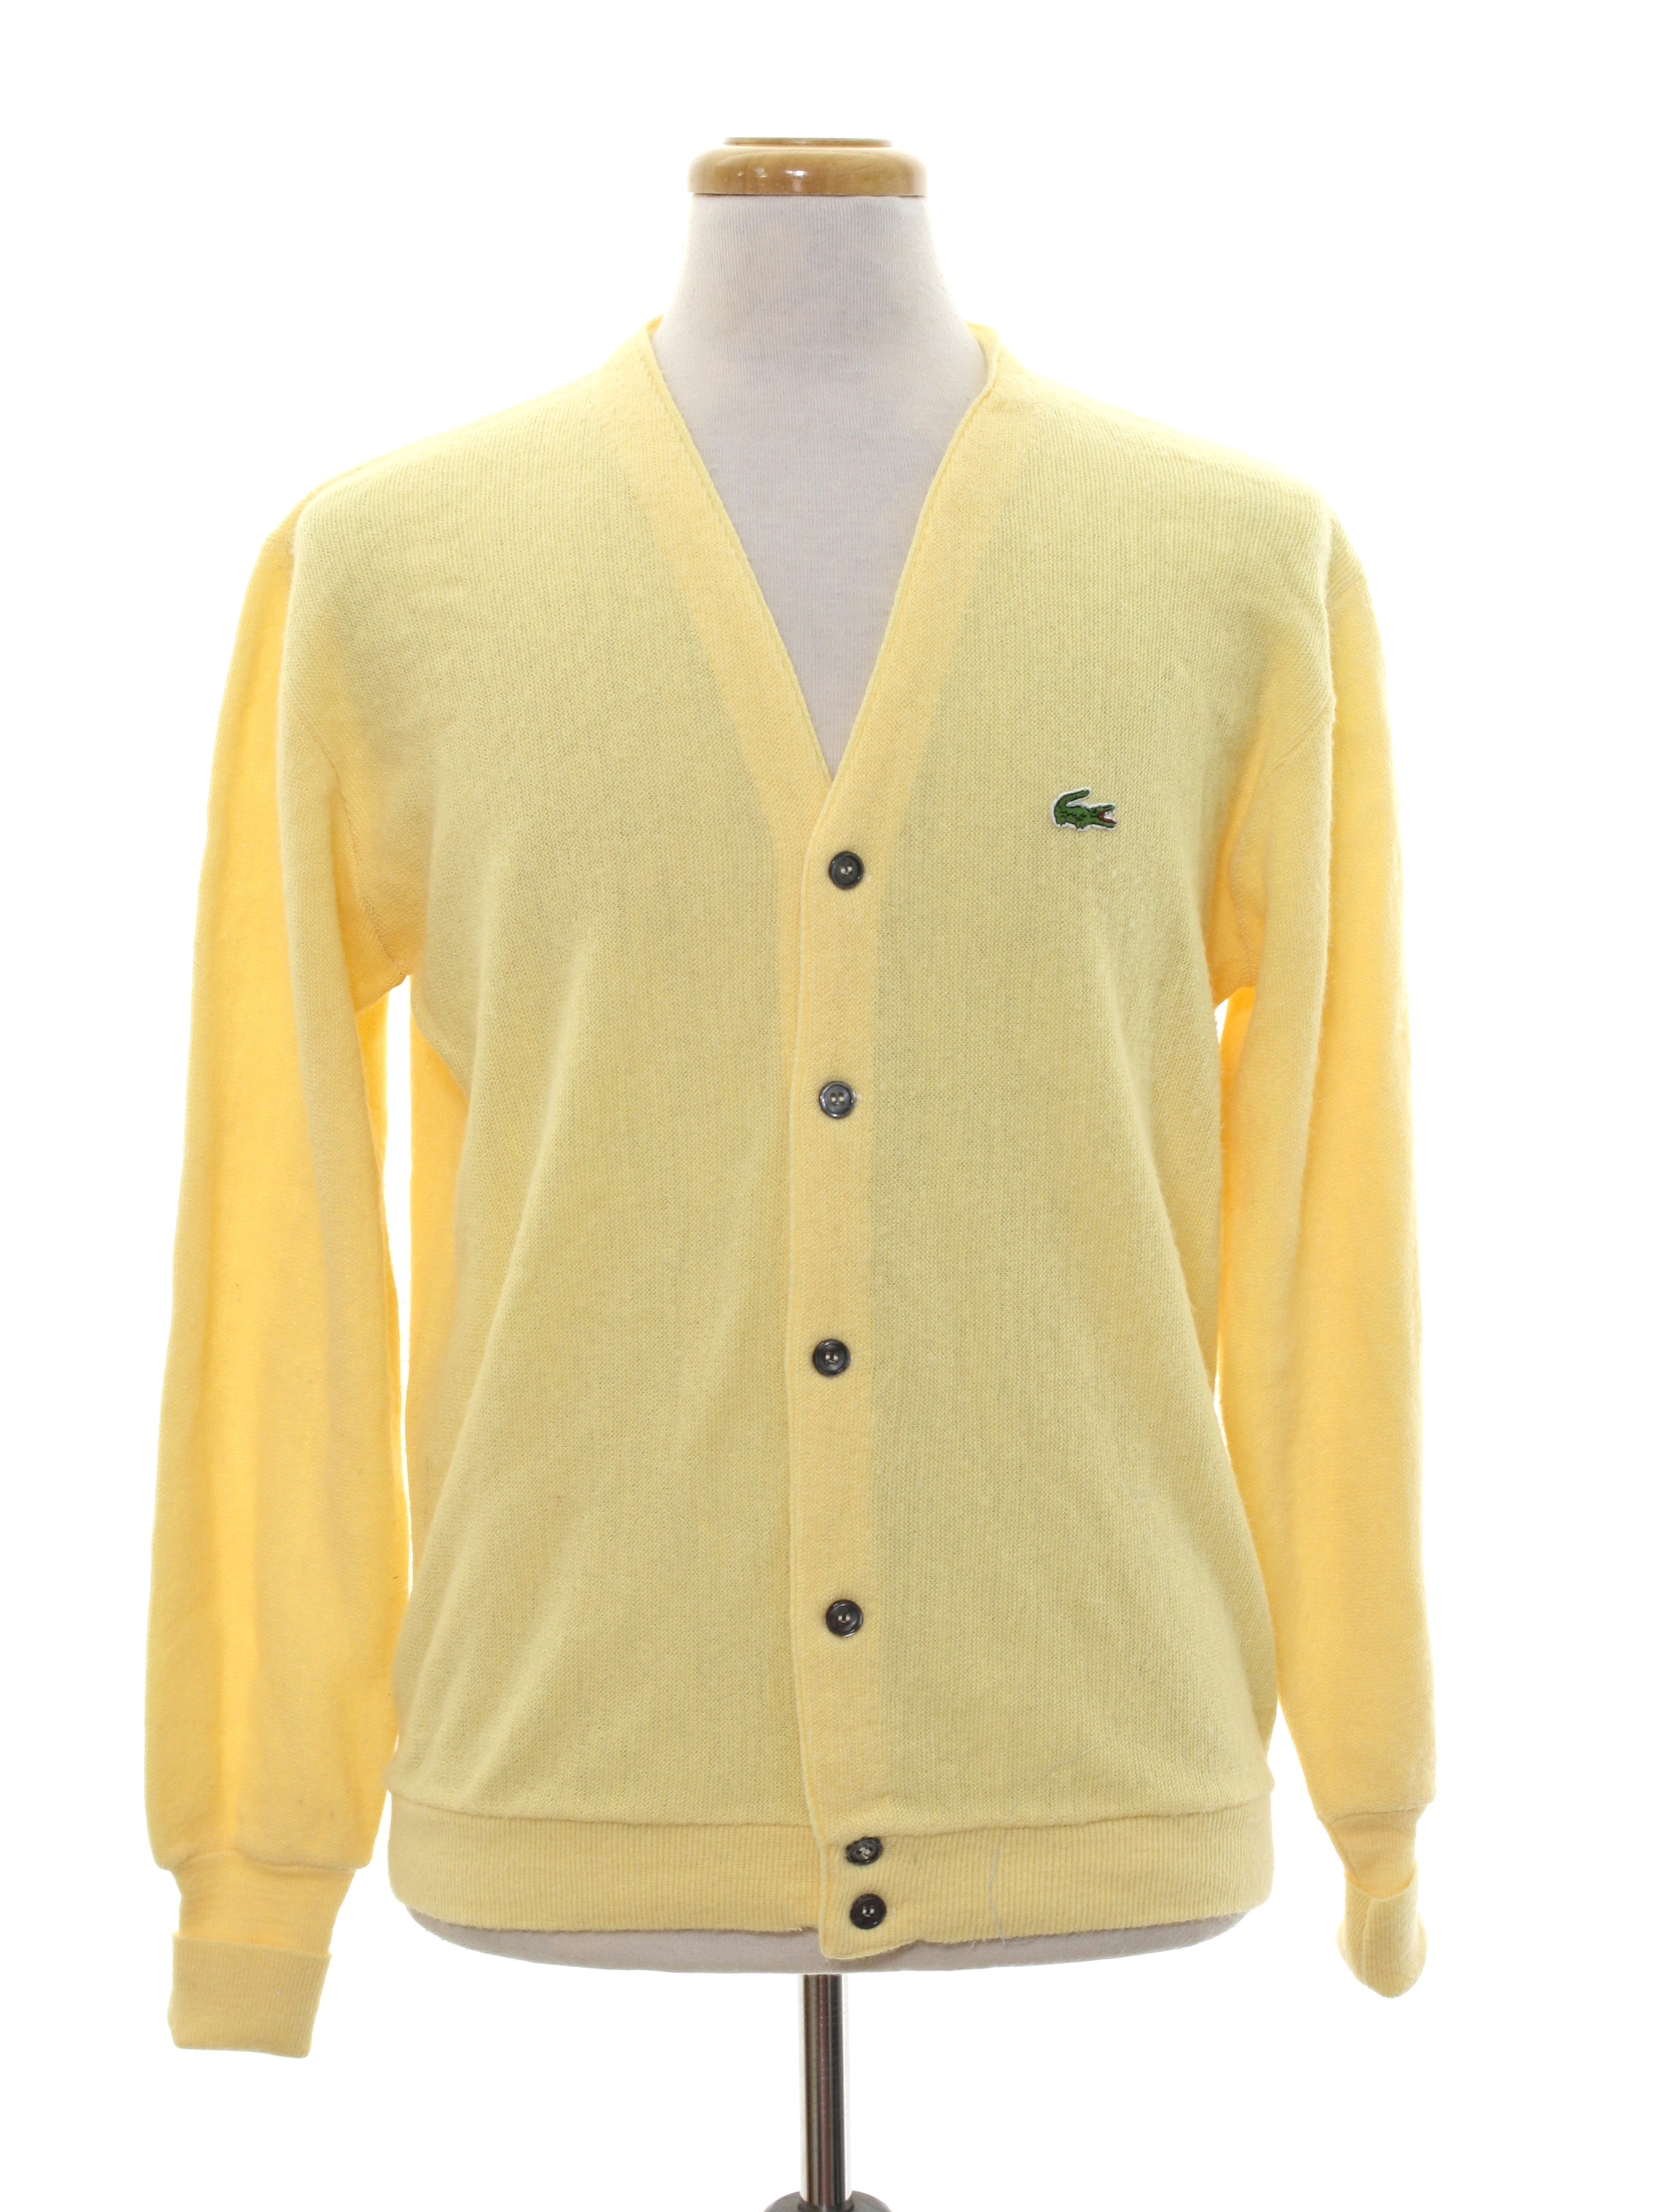 Vintage 1980's Caridgan Sweater: Early 80s -Izod Lacoste- Mens yellow ...